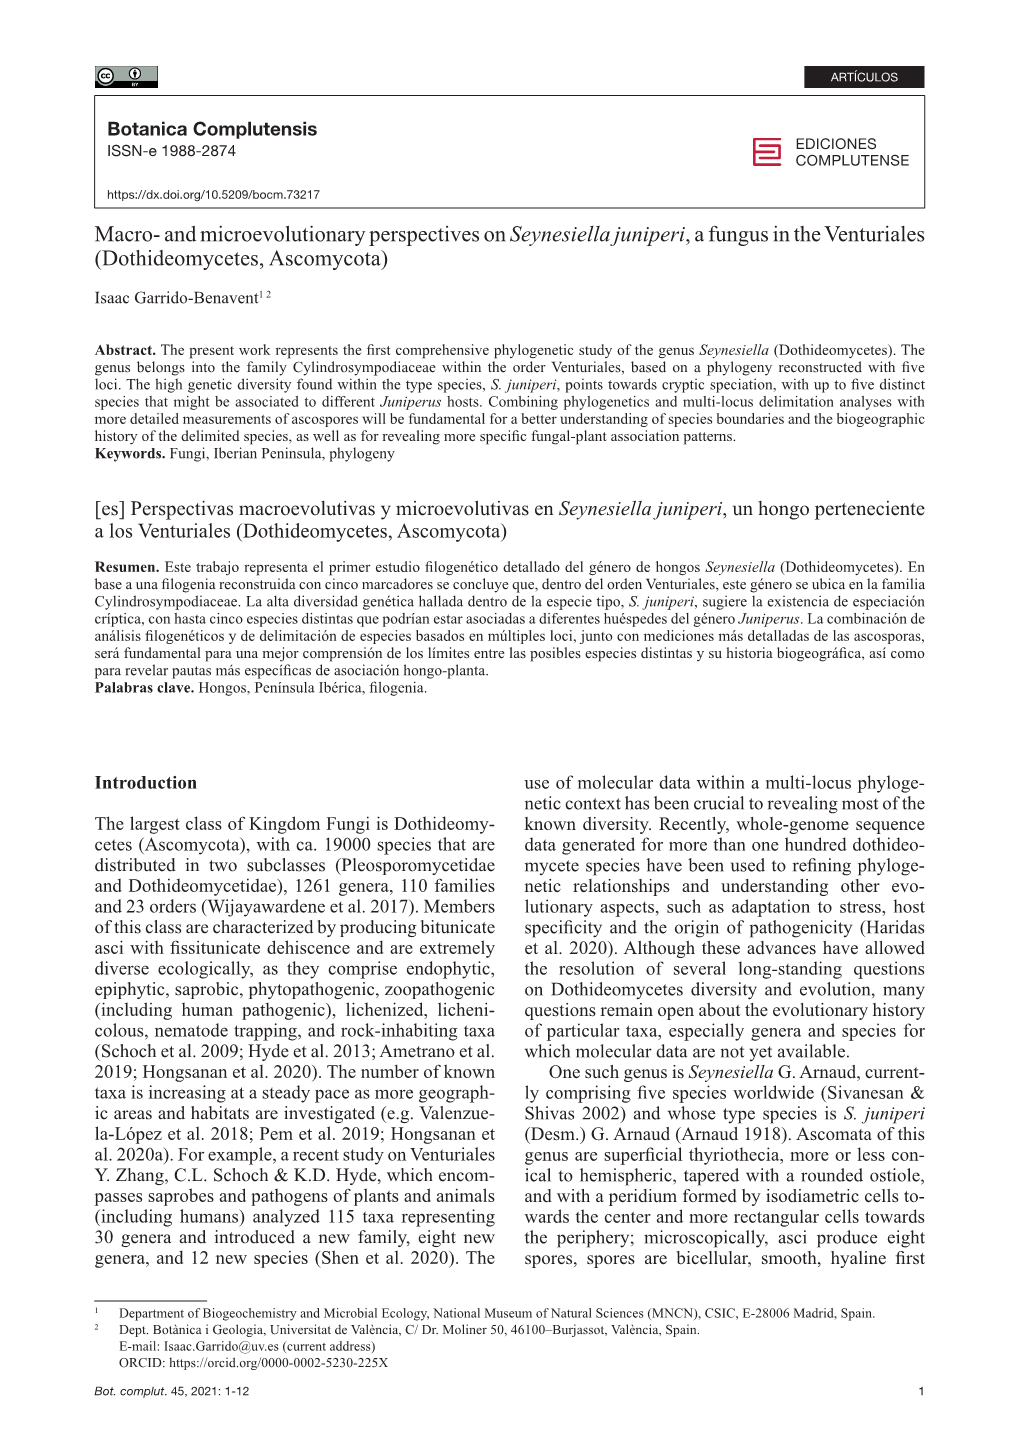 Macro- and Microevolutionary Perspectives on Seynesiella Juniperi, a Fungus in the Venturiales (Dothideomycetes, Ascomycota)